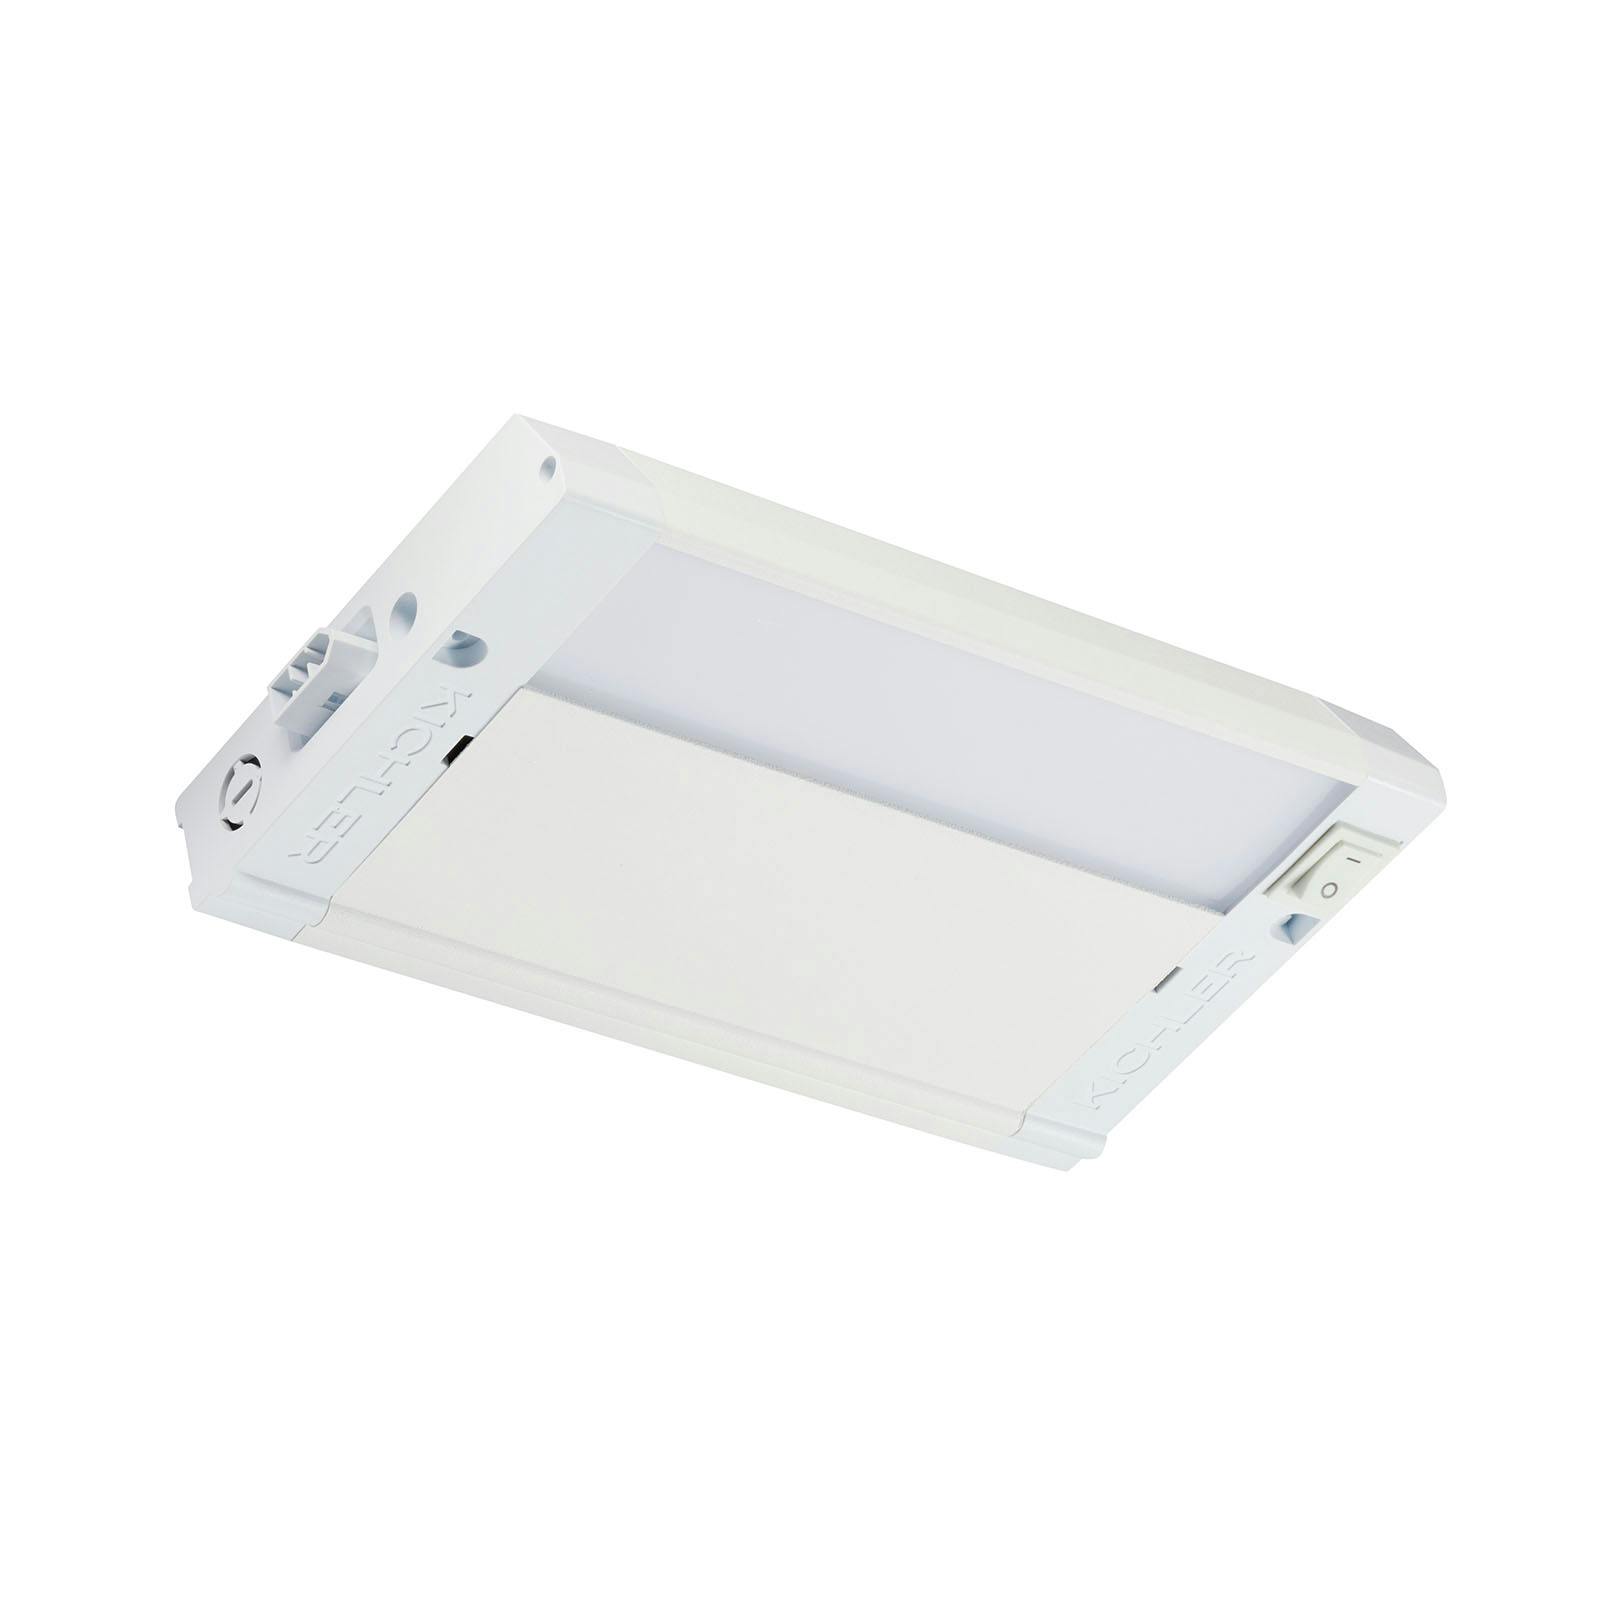 4U 8" 2700K LED Cabinet Light White on a white background